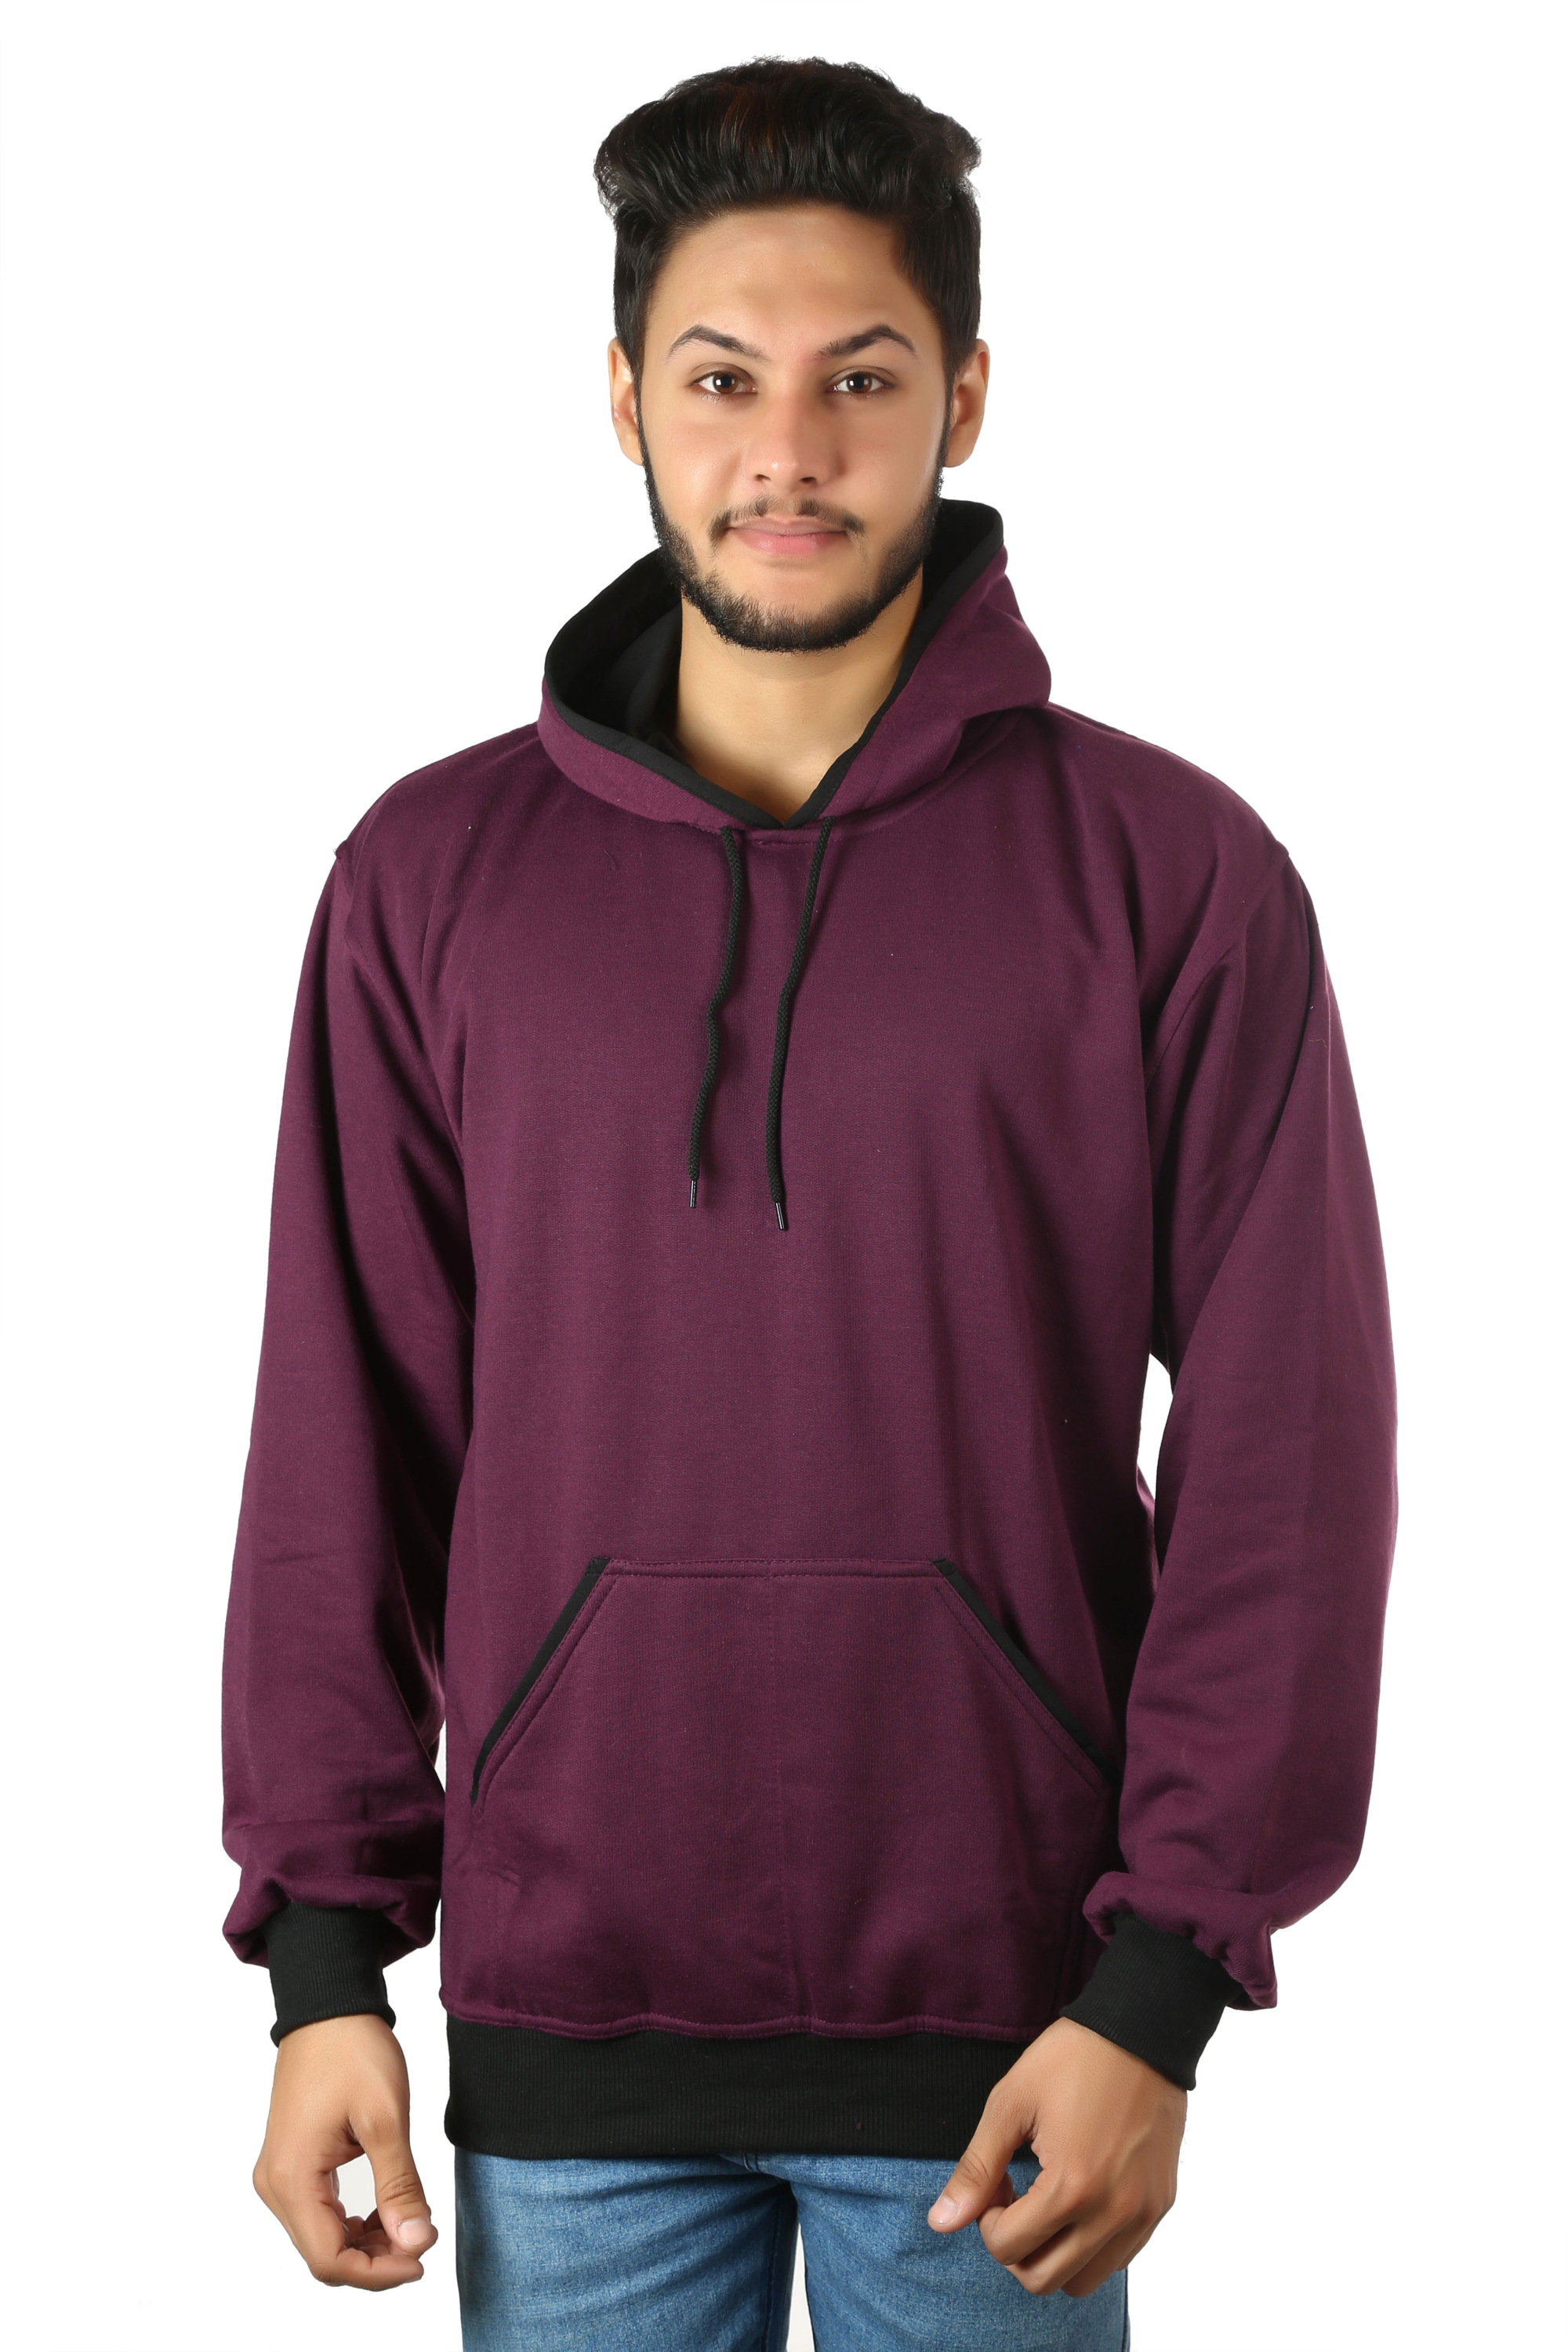 Buy Kristof Purple Hooded Sweatshirt Online @ ₹499 from ShopClues